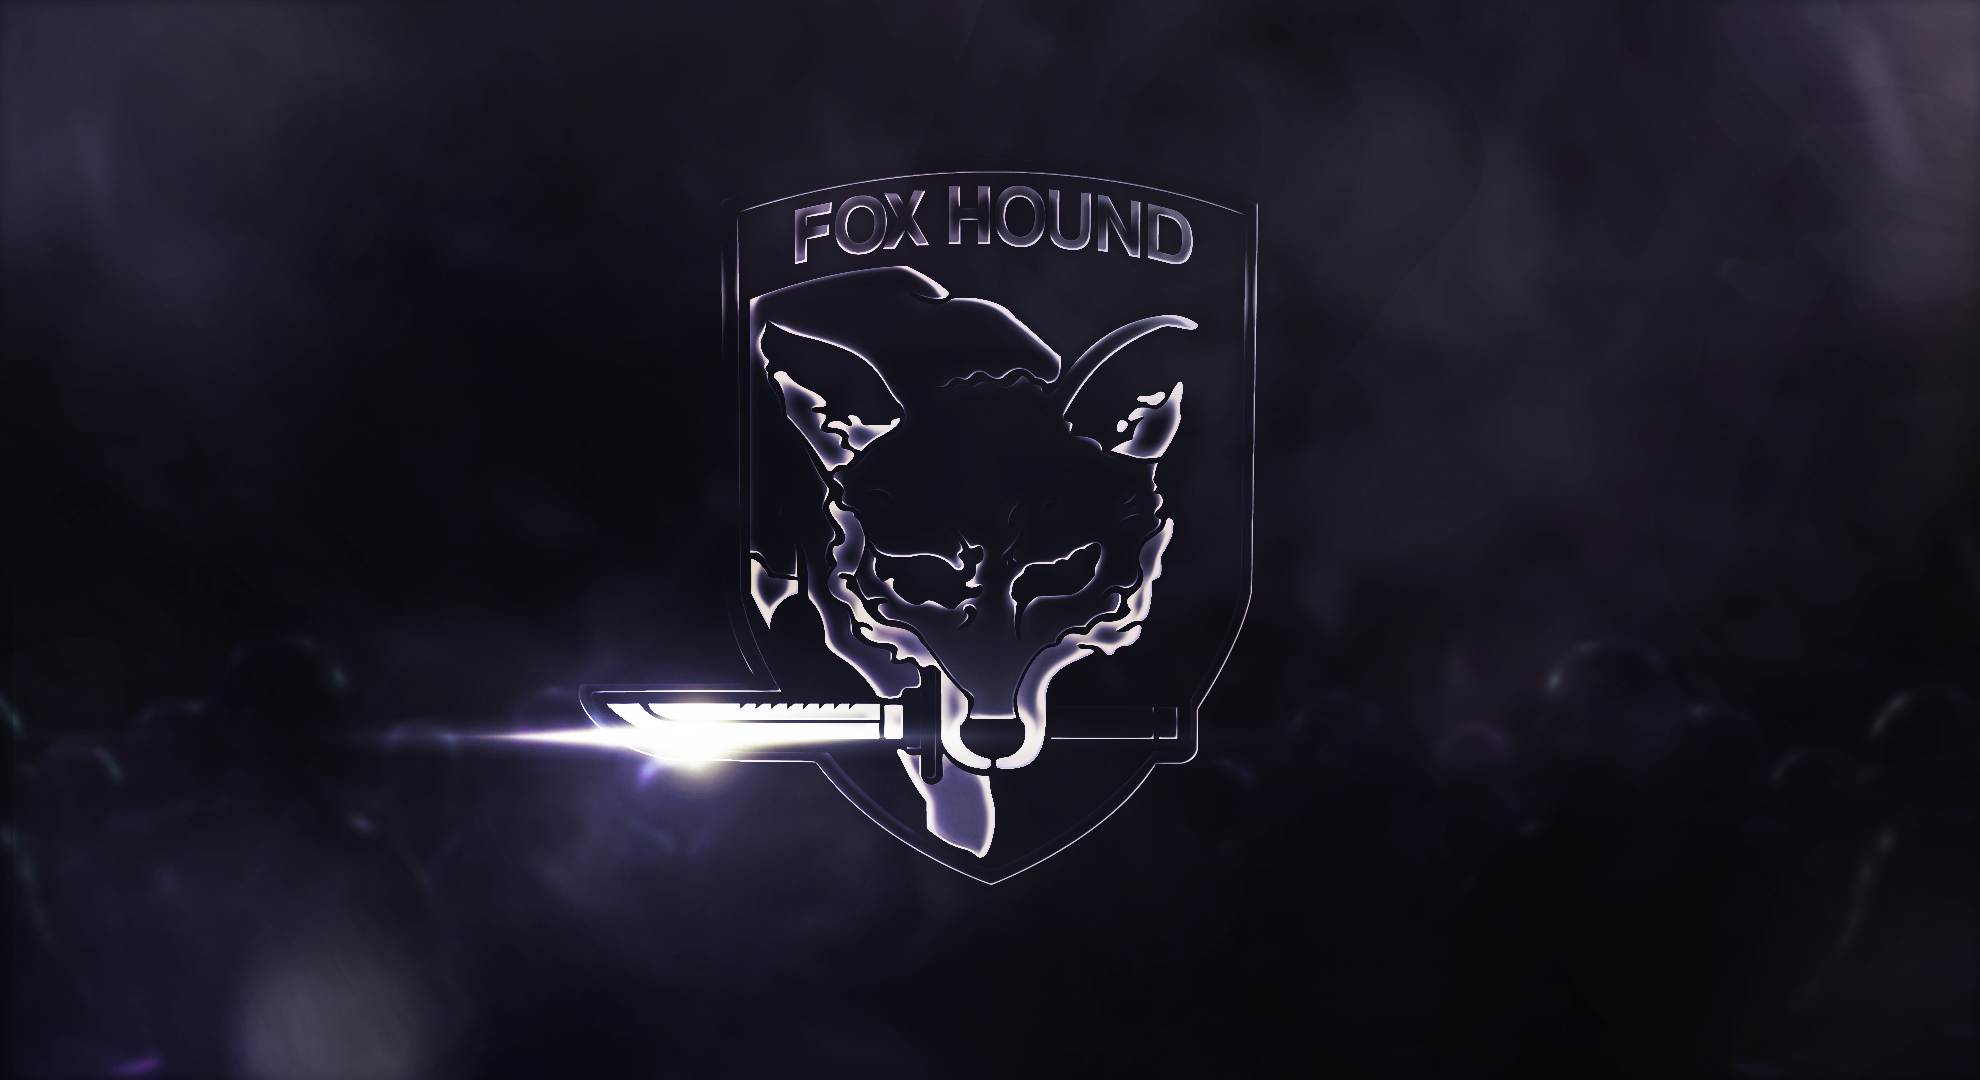 Foxhound Metal Gear Solid By Freshpaprika